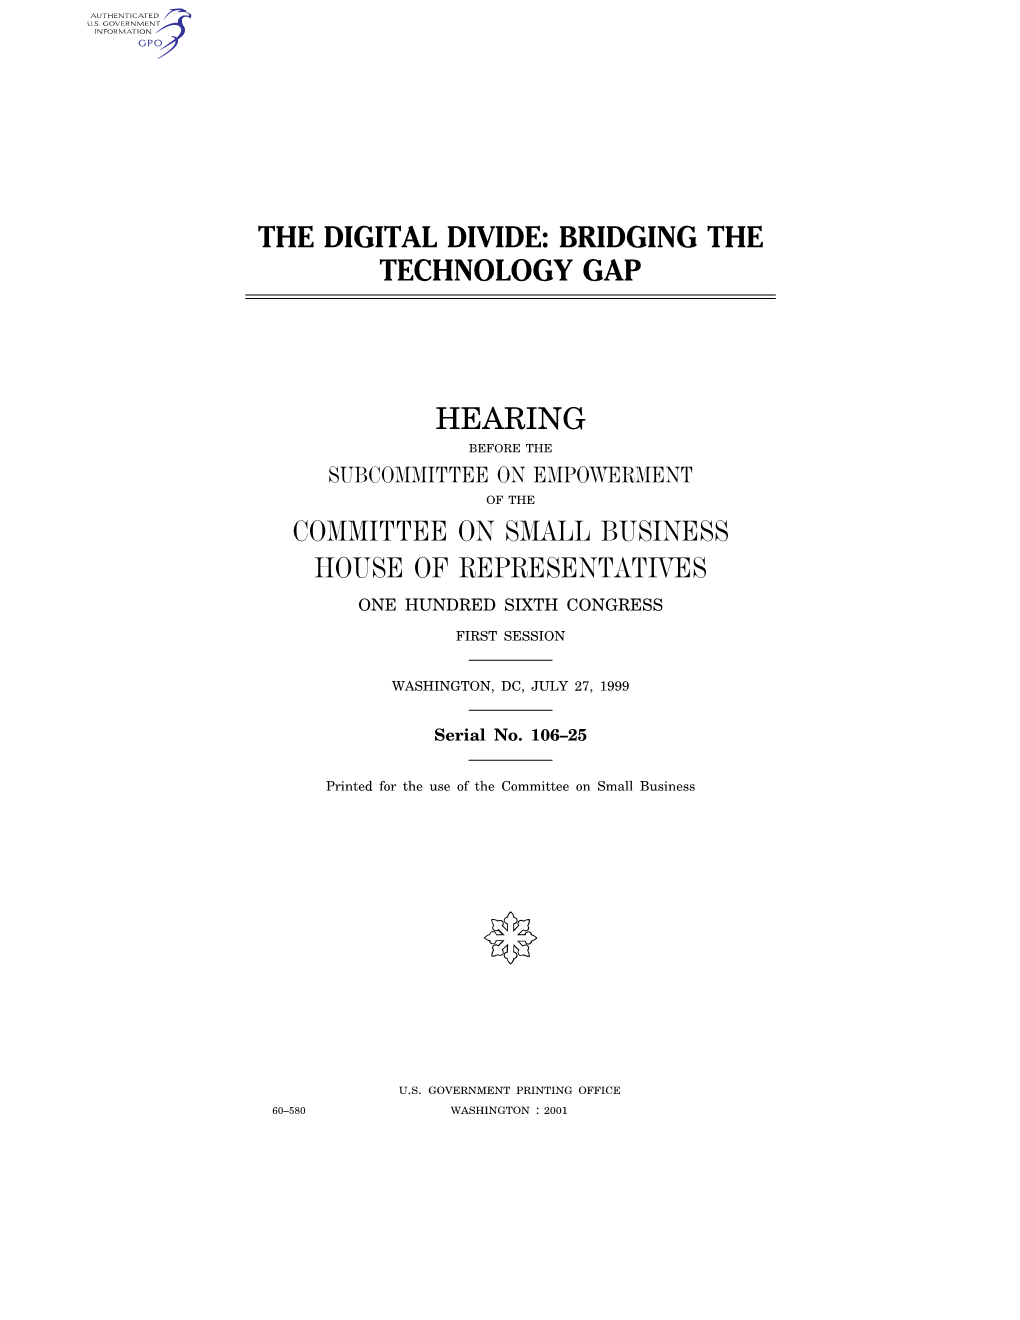 The Digital Divide: Bridging the Technology Gap